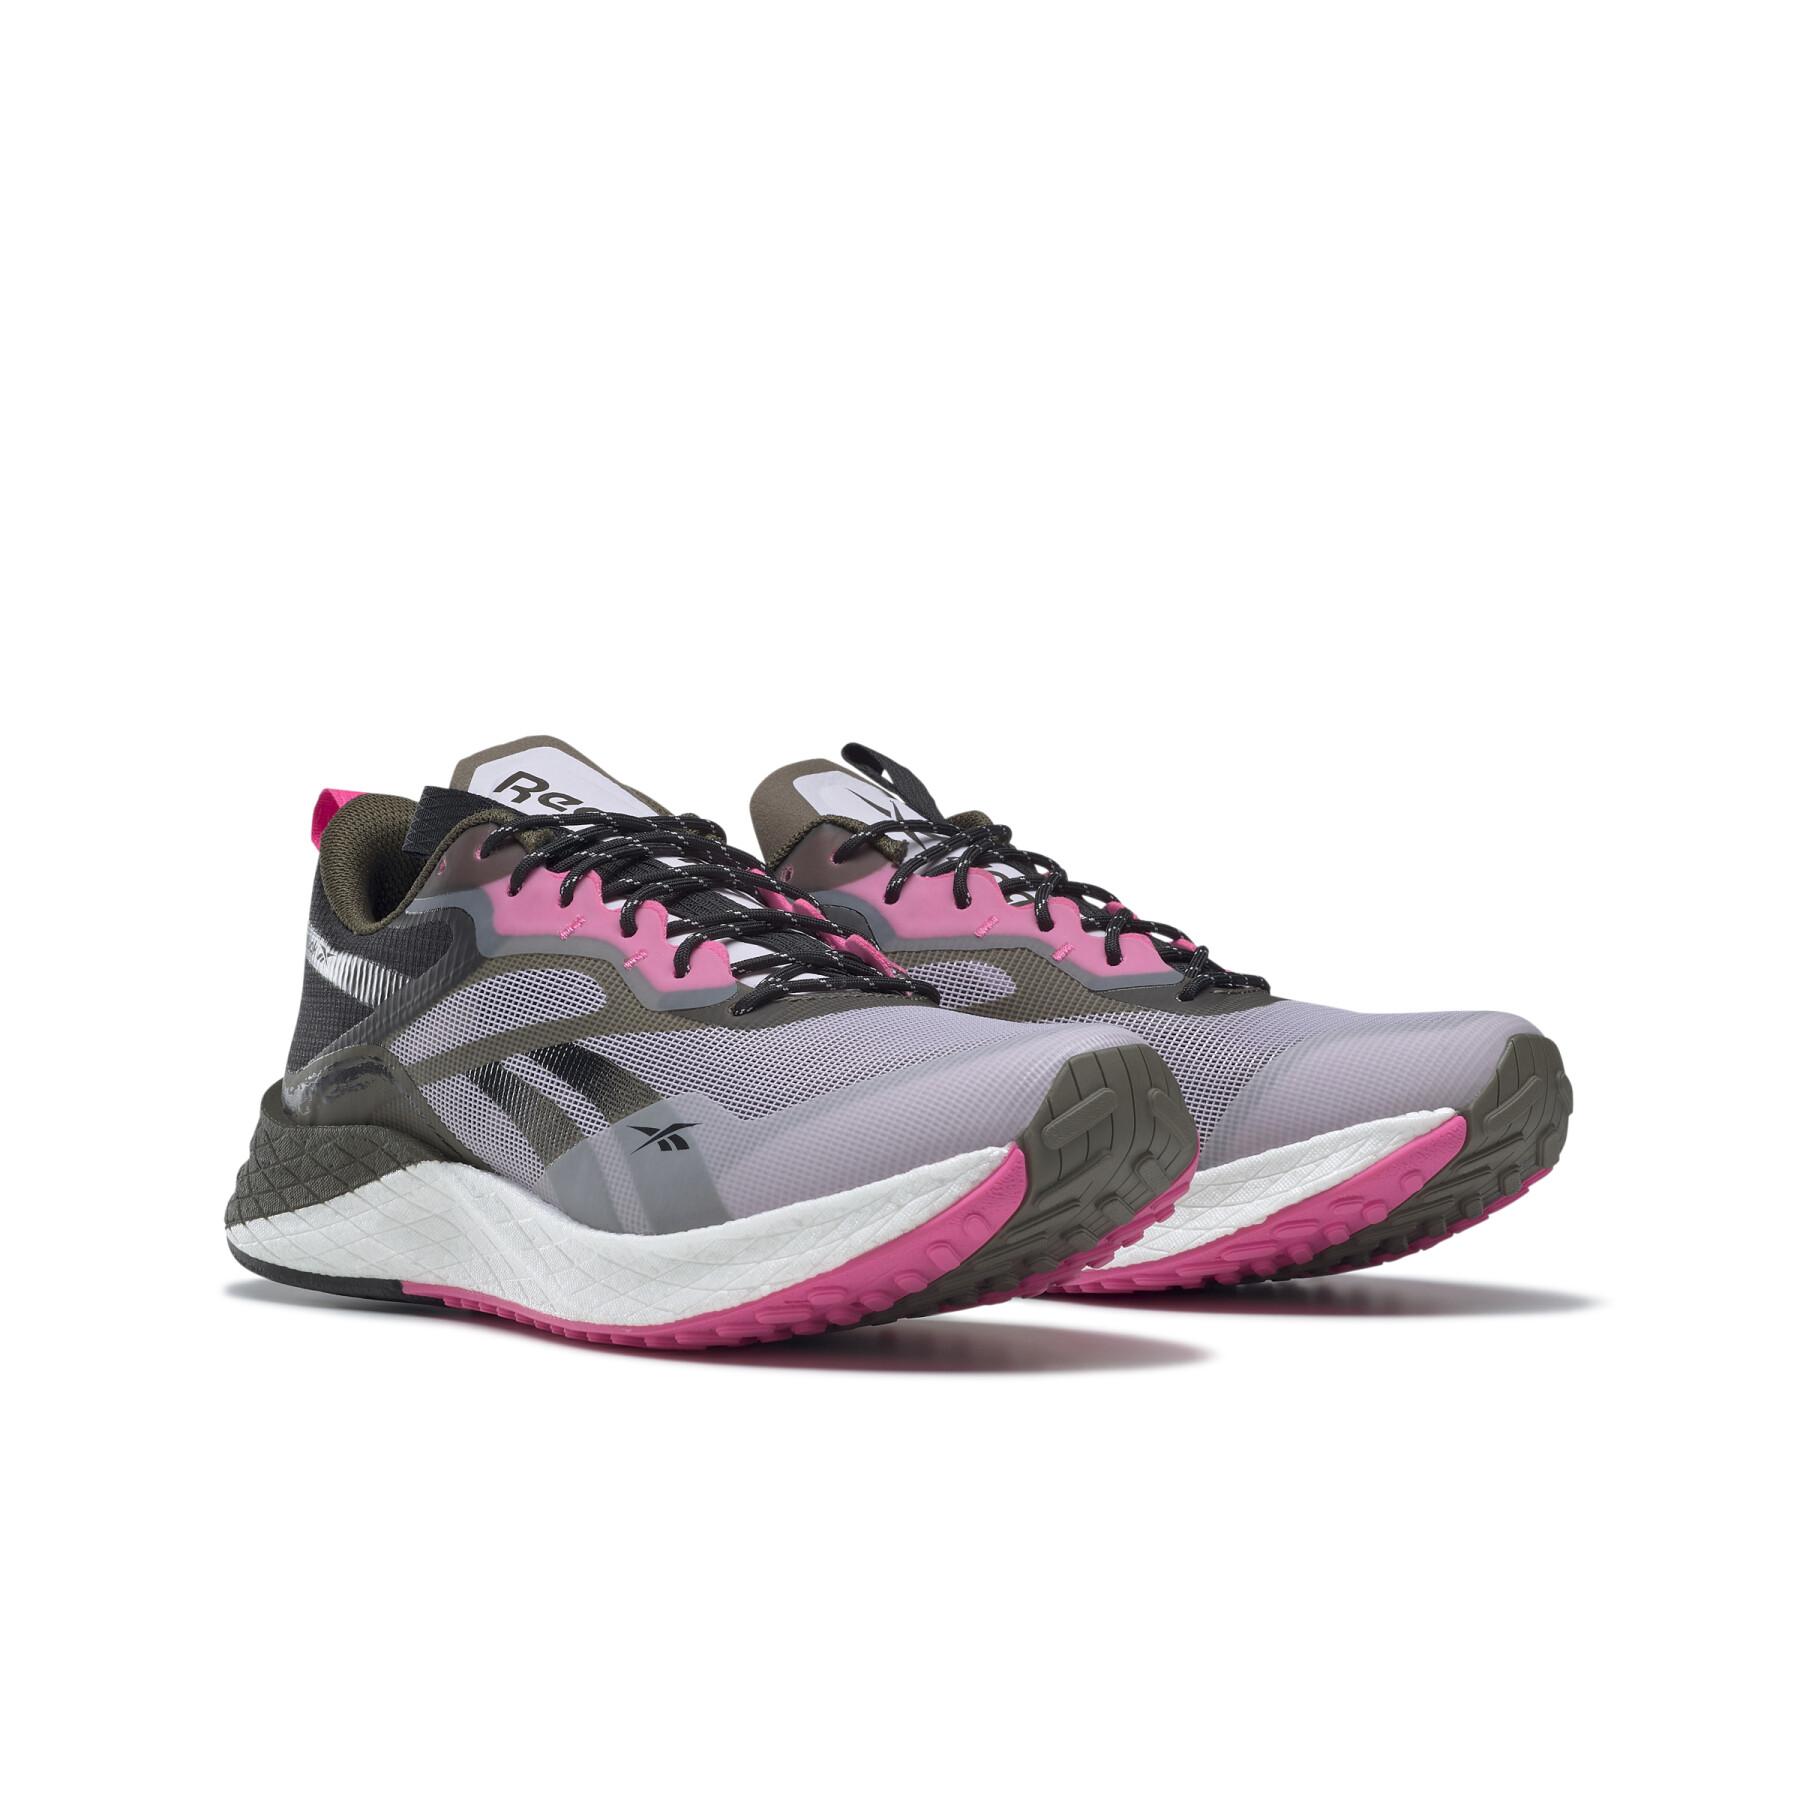 Chaussures de running femme Reebok Floatride Energy 3 Adventure